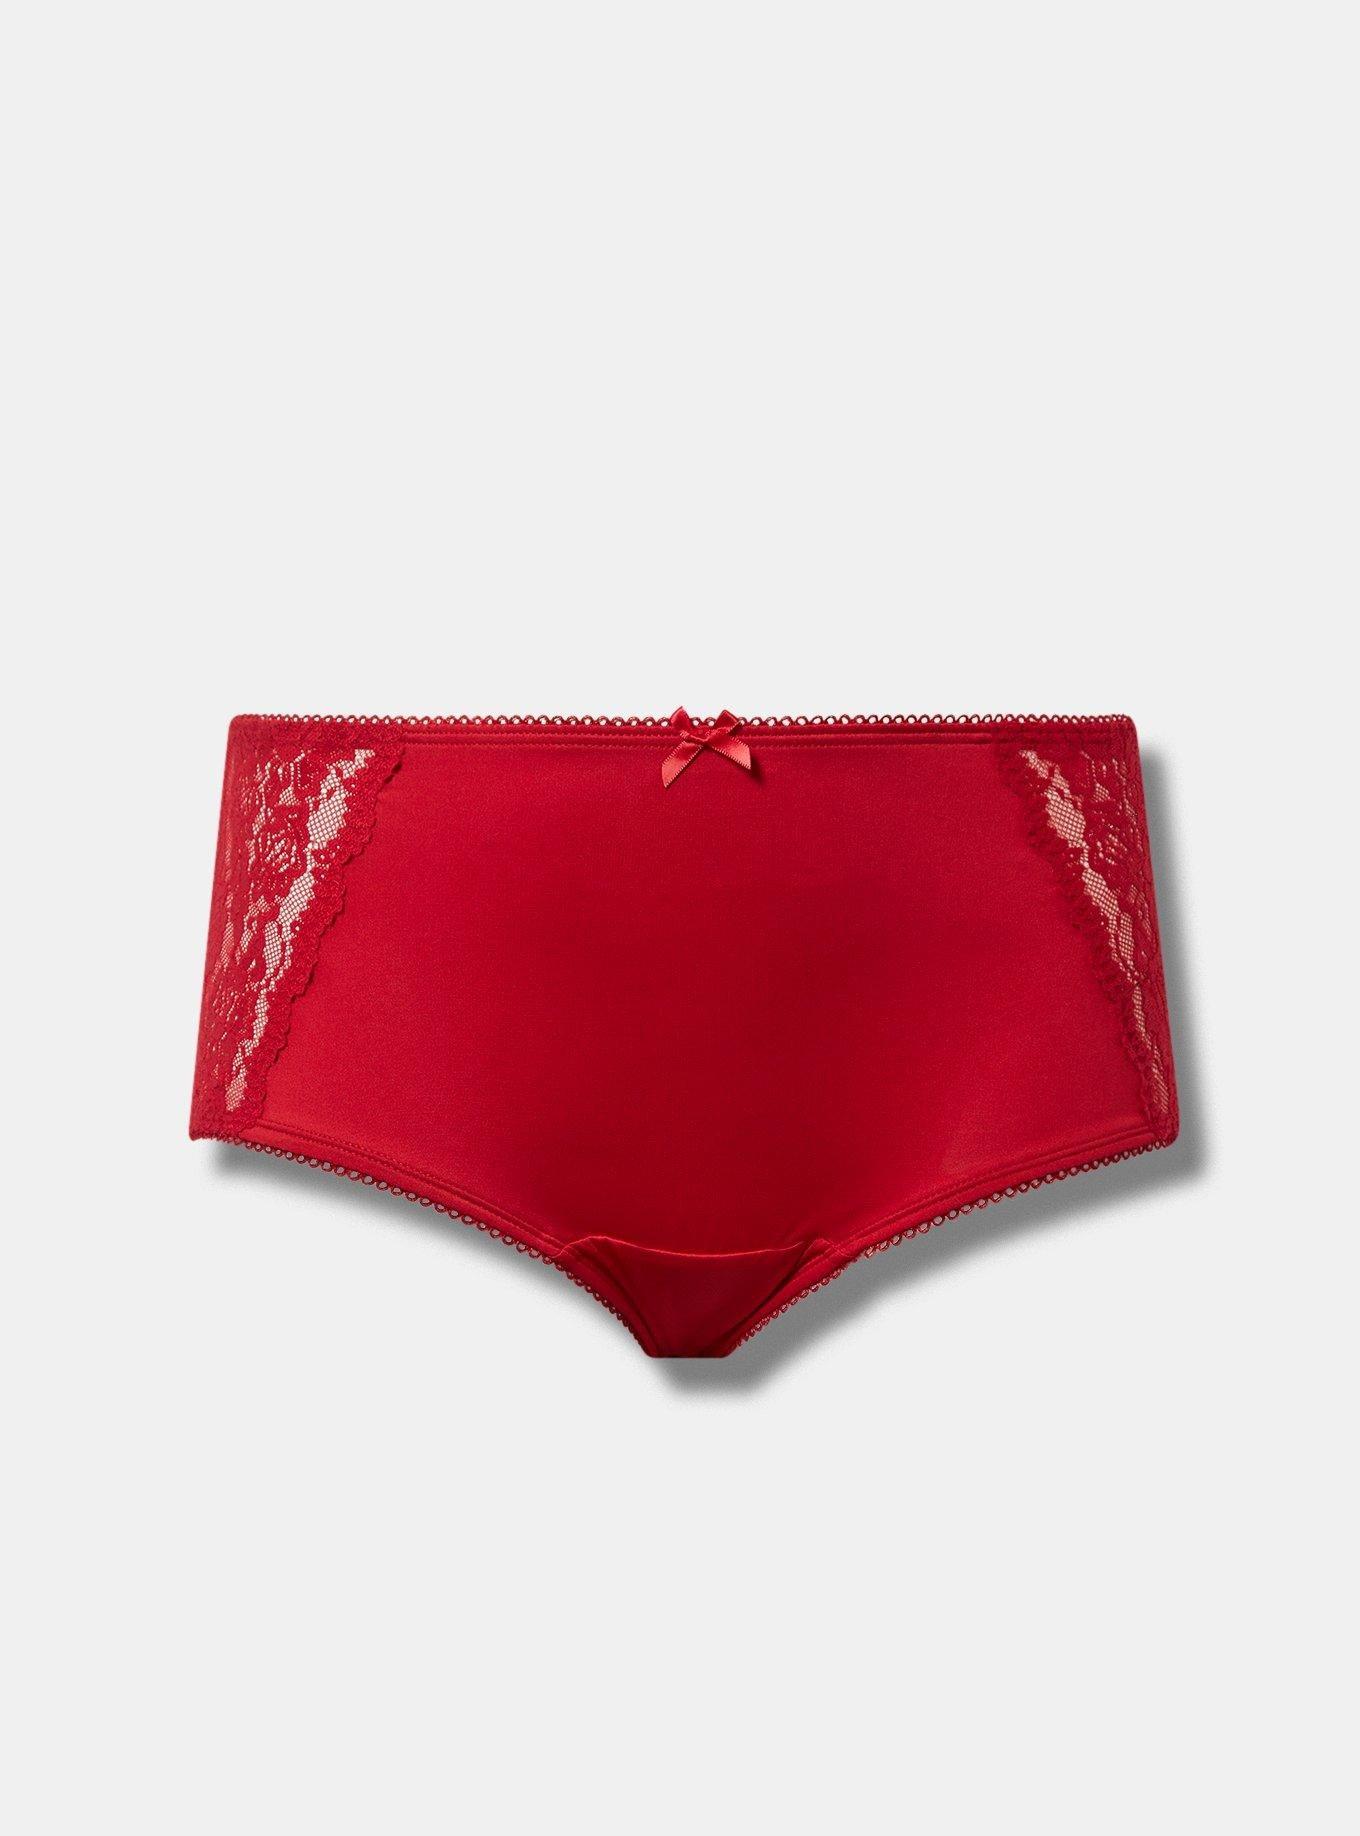 UK Women Sexy Lingerie Cut Out Heart Two Piece Underwear Thongs Bra  /Panties Set